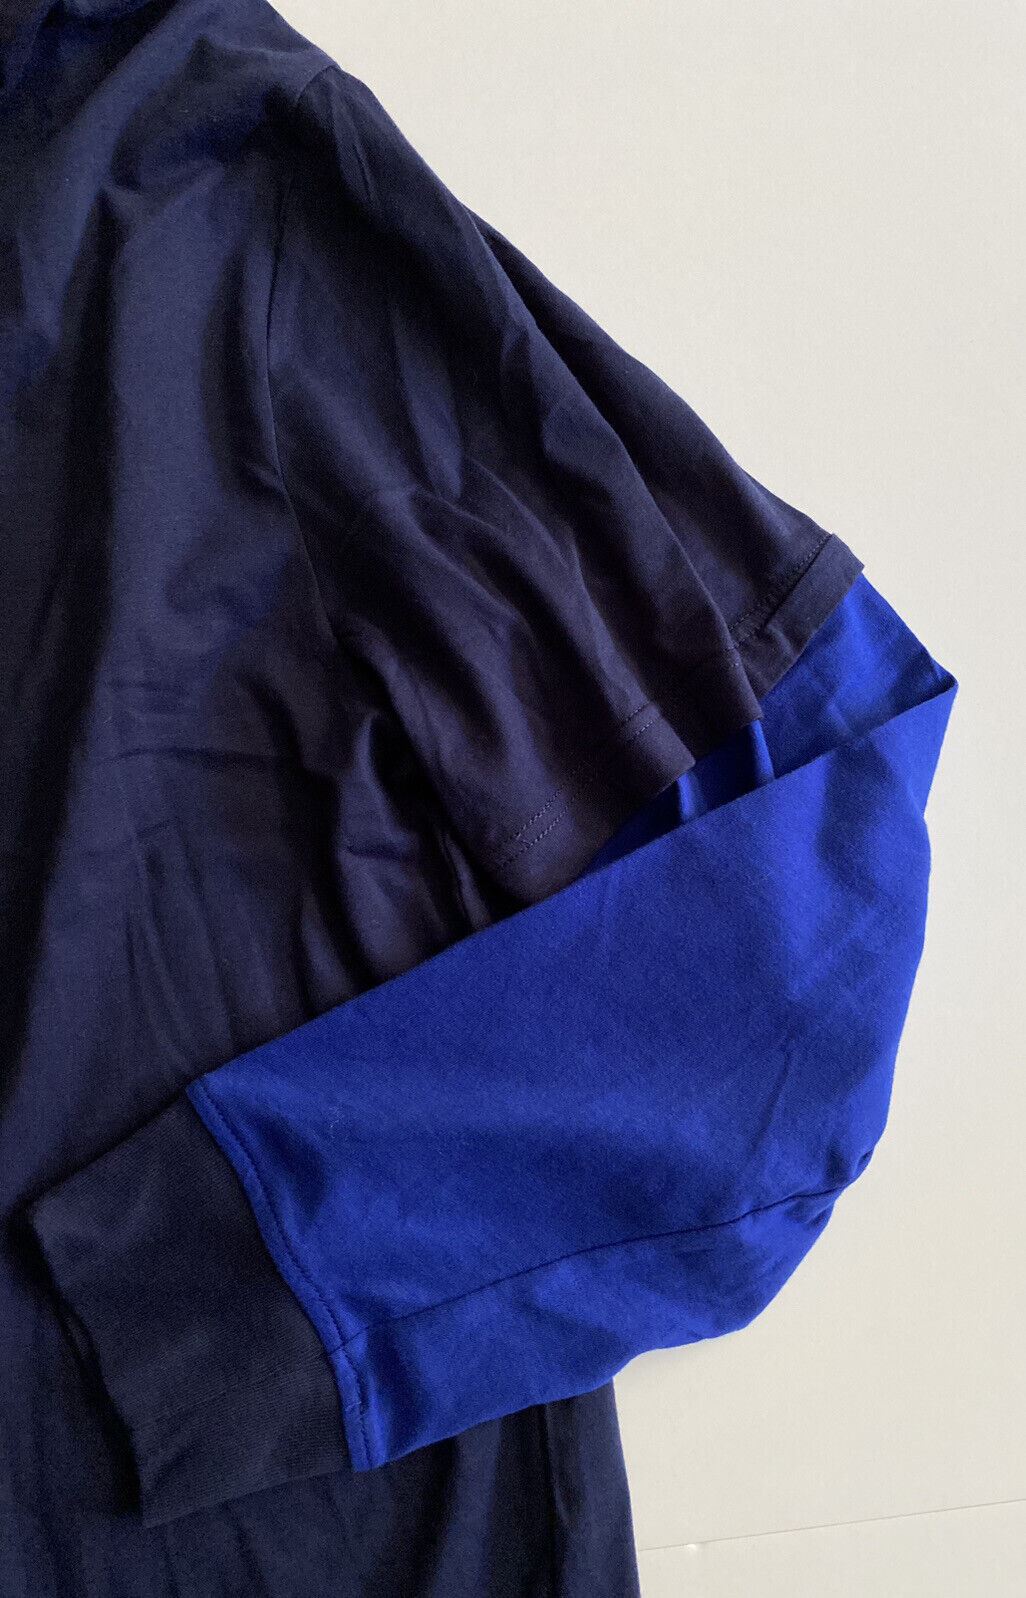 Neu mit Etikett: Polo Ralph Lauren Langarm-Sweatshirt mit Signature-Logo, Marineblau, M 